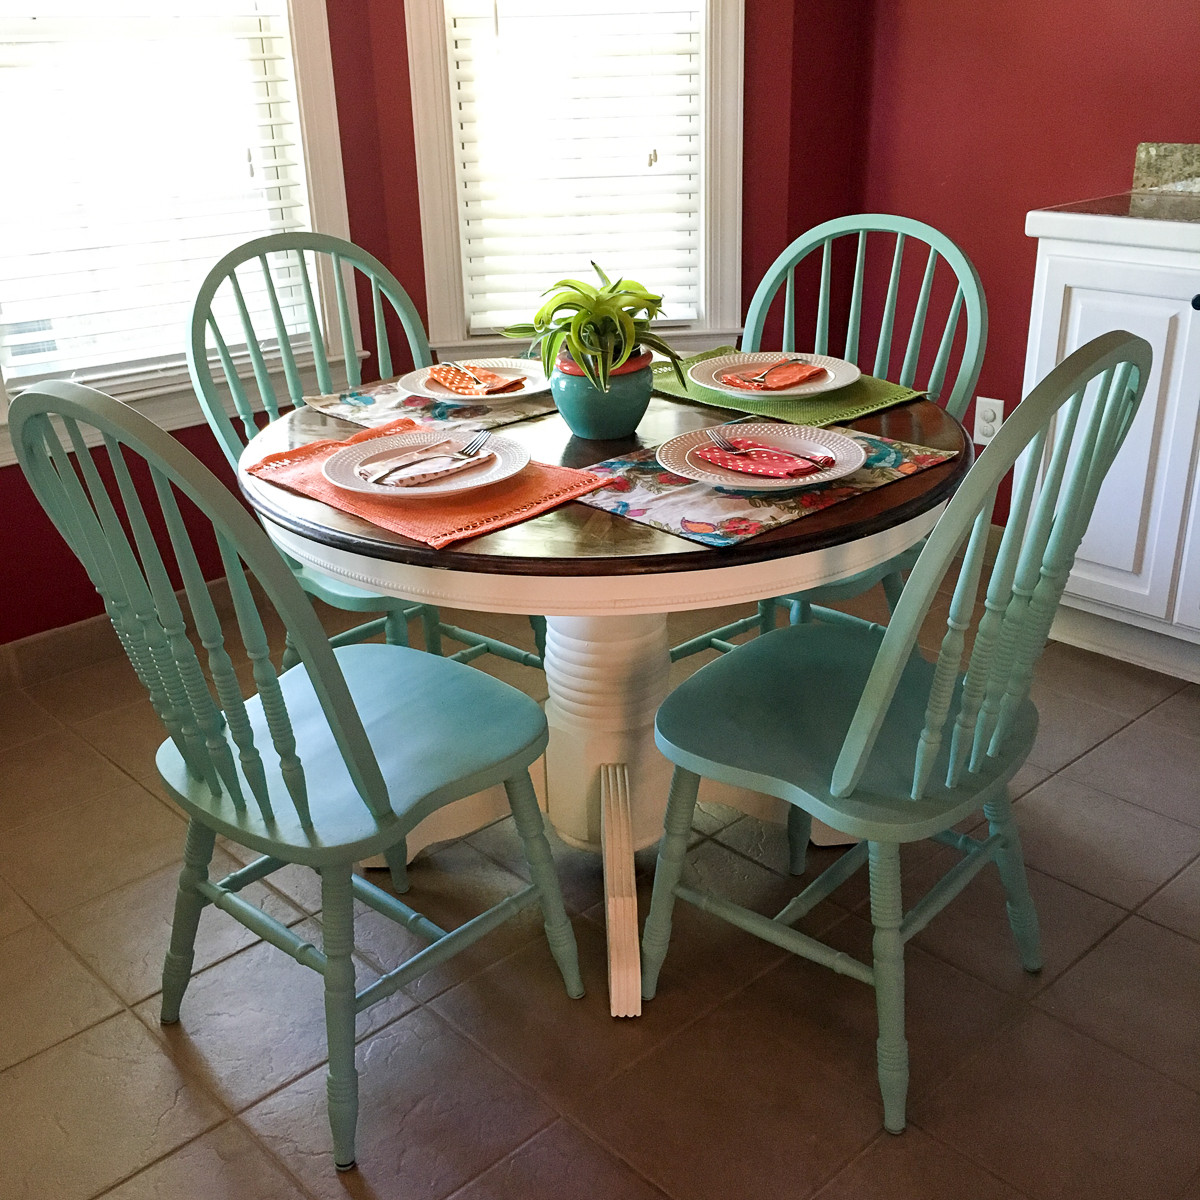 White Kitchen Table Set
 Turquoise and White Kitchen Table Round Table The